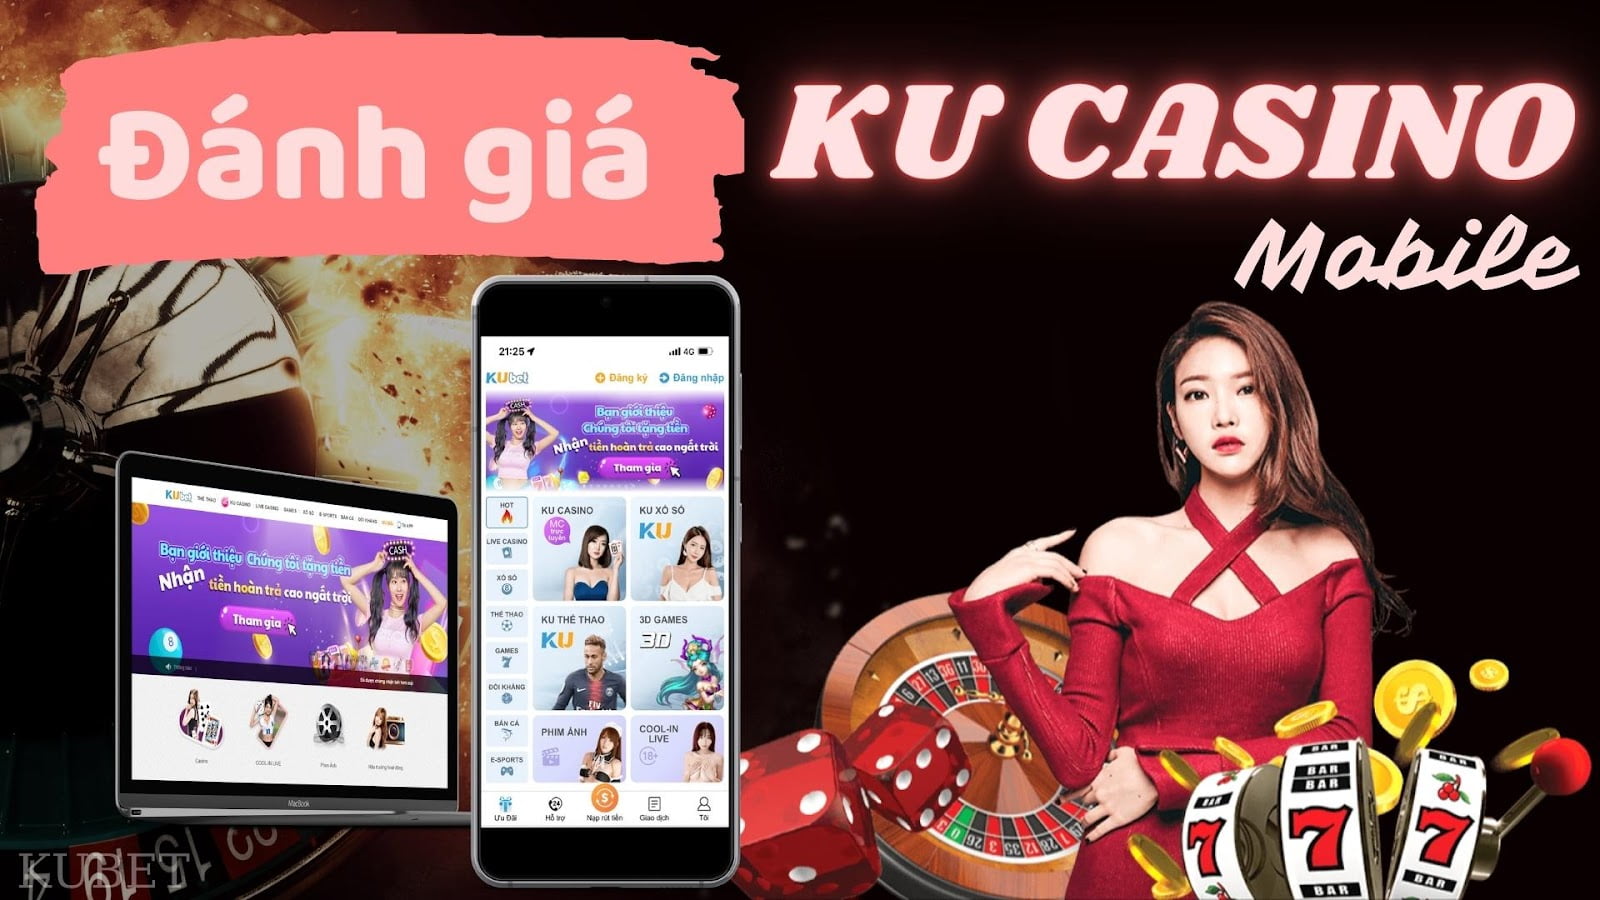 Ku Casino Kubet mobile